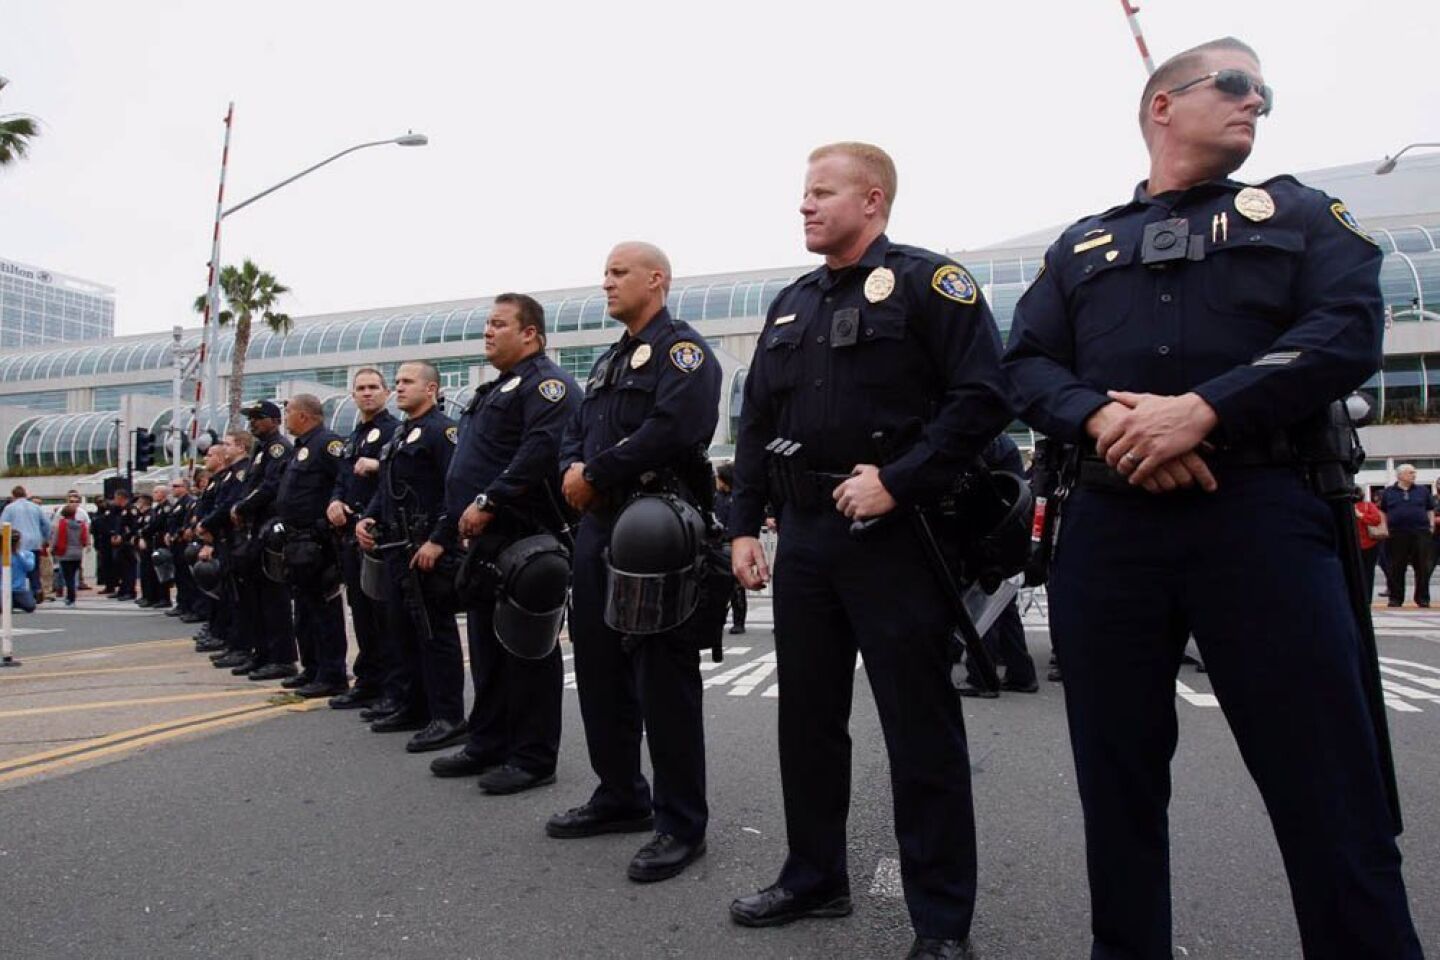 San Diego Police prepare for protester prior @realDonalTrump rally in San Diego.